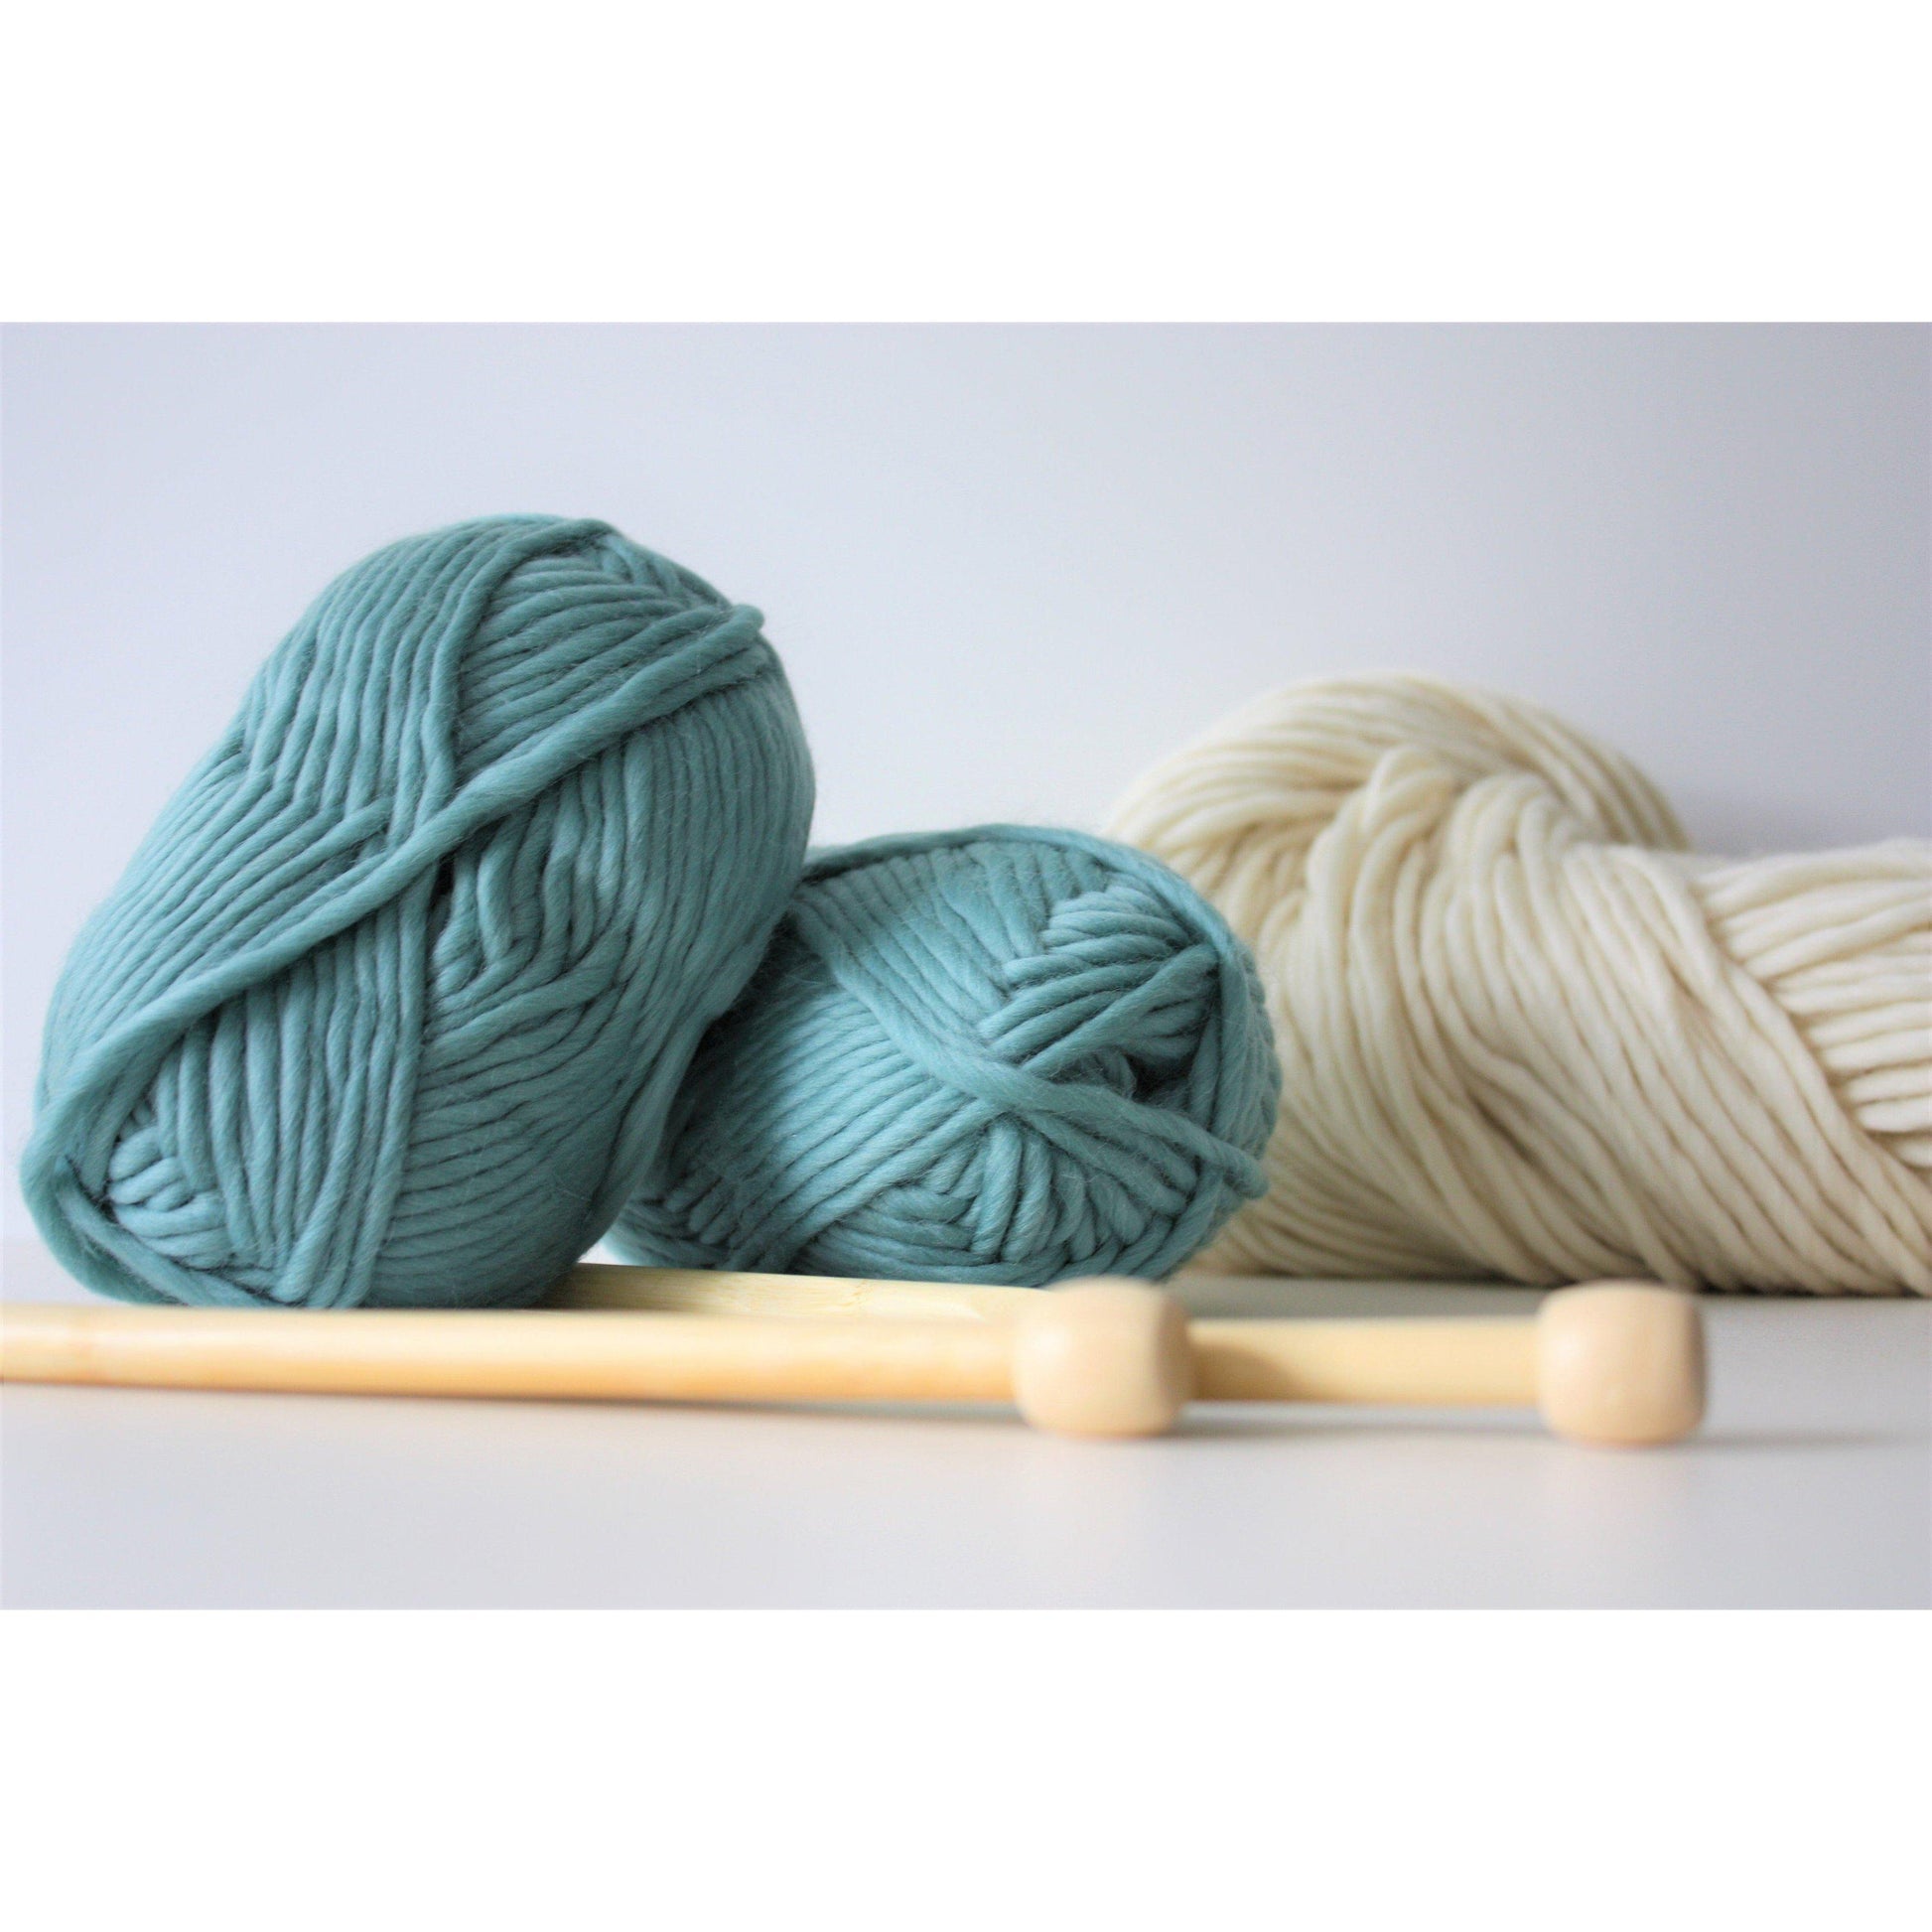 Buy Yarn Online Knitting Blended Wool Acrylic 4 Ply Yarn - China 4 Ply Yarn  and Acrylic Yarn price